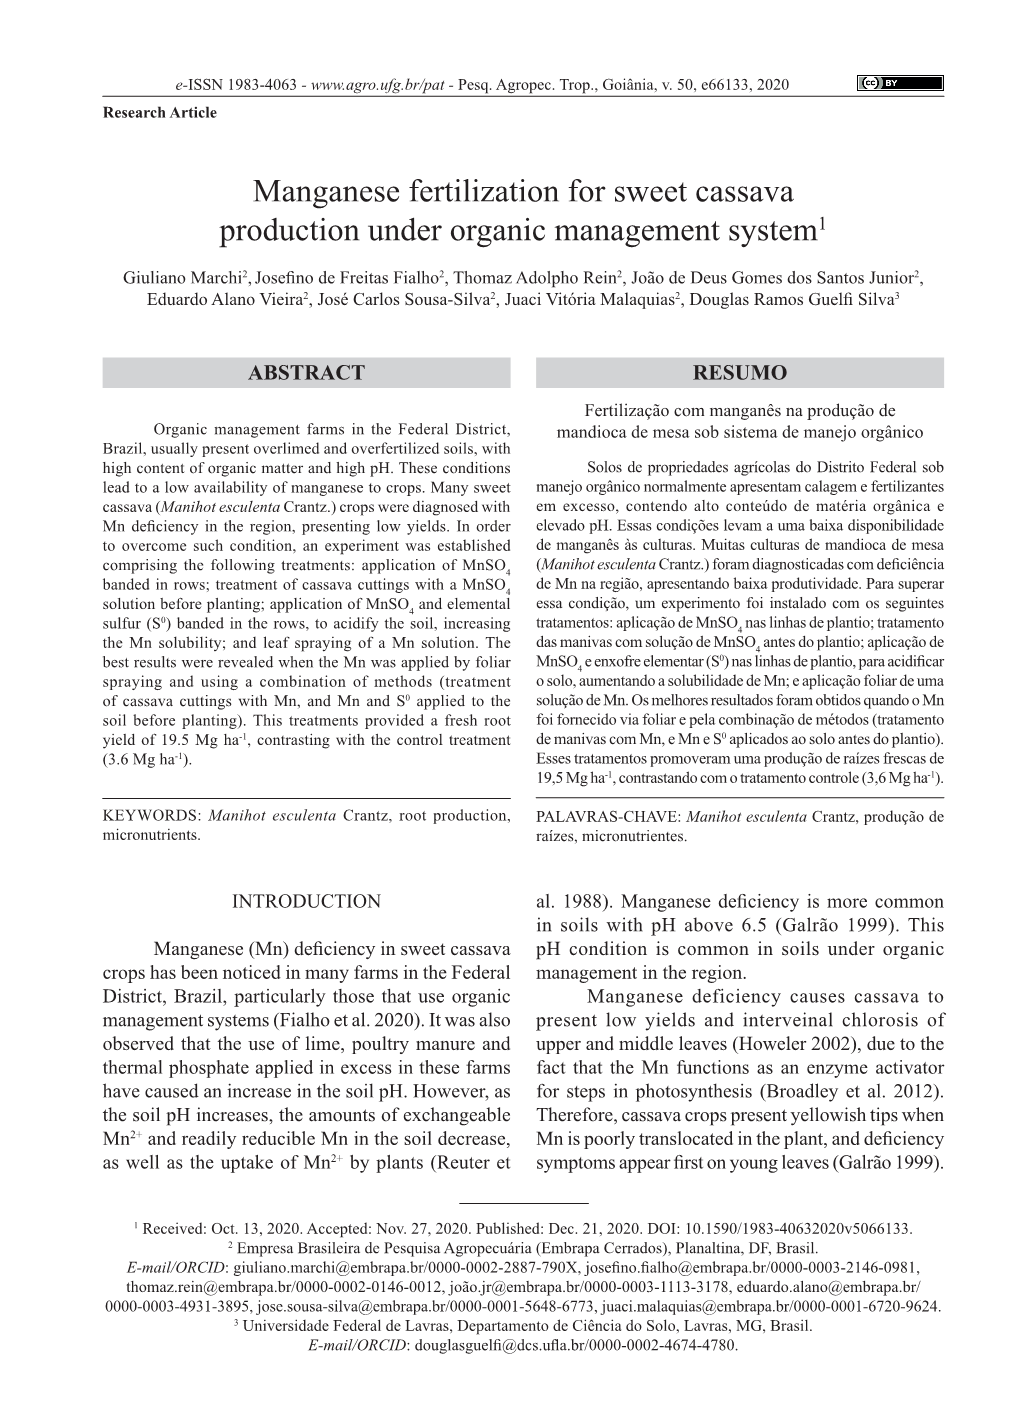 Manganese Fertilization for Sweet Cassava Production Under Organic Management System1